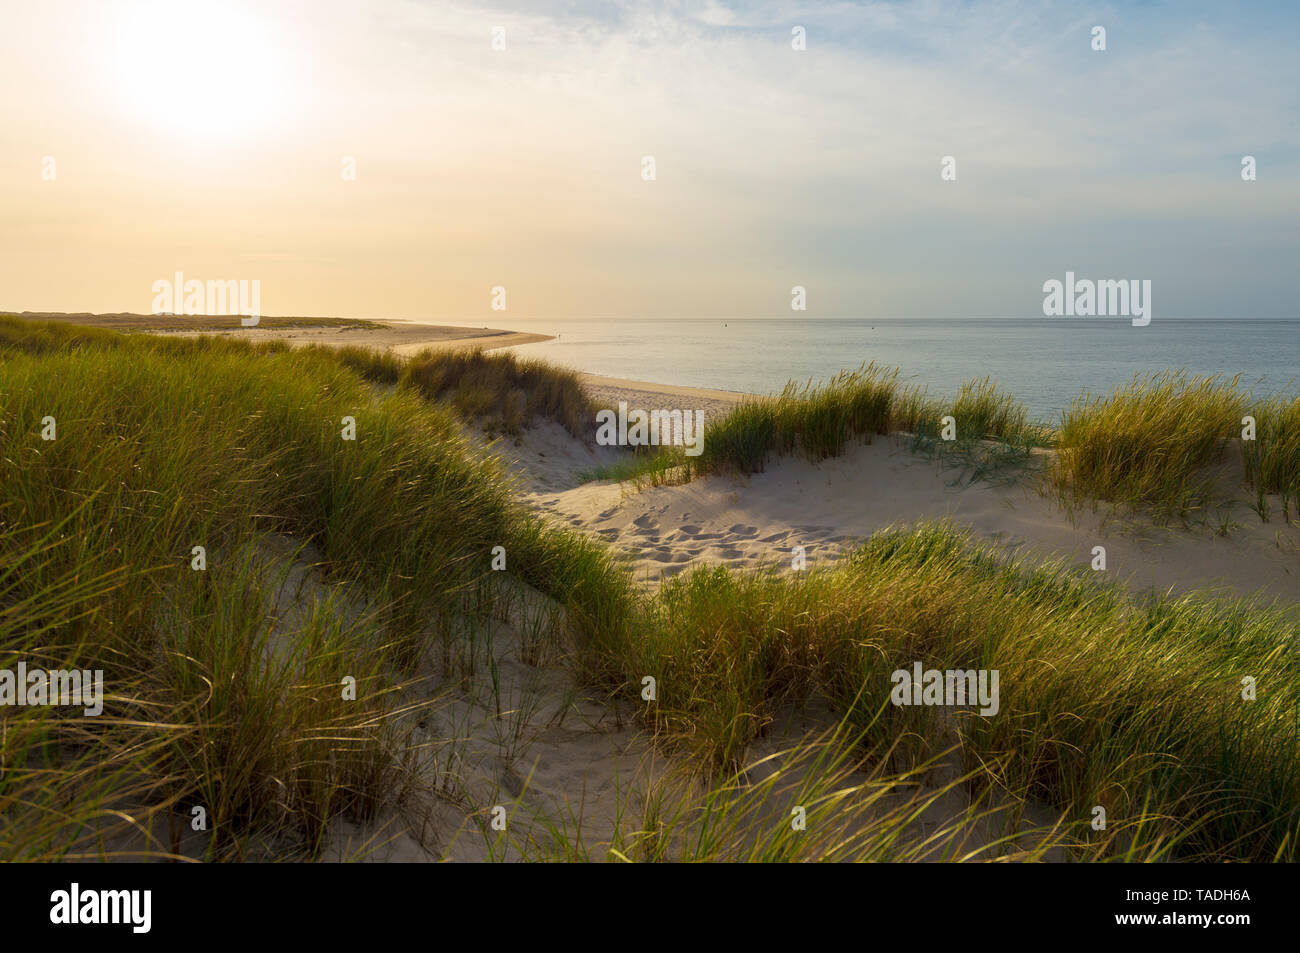 Allemagne, Sylt, Mer du Nord, coucher de soleil Banque D'Images